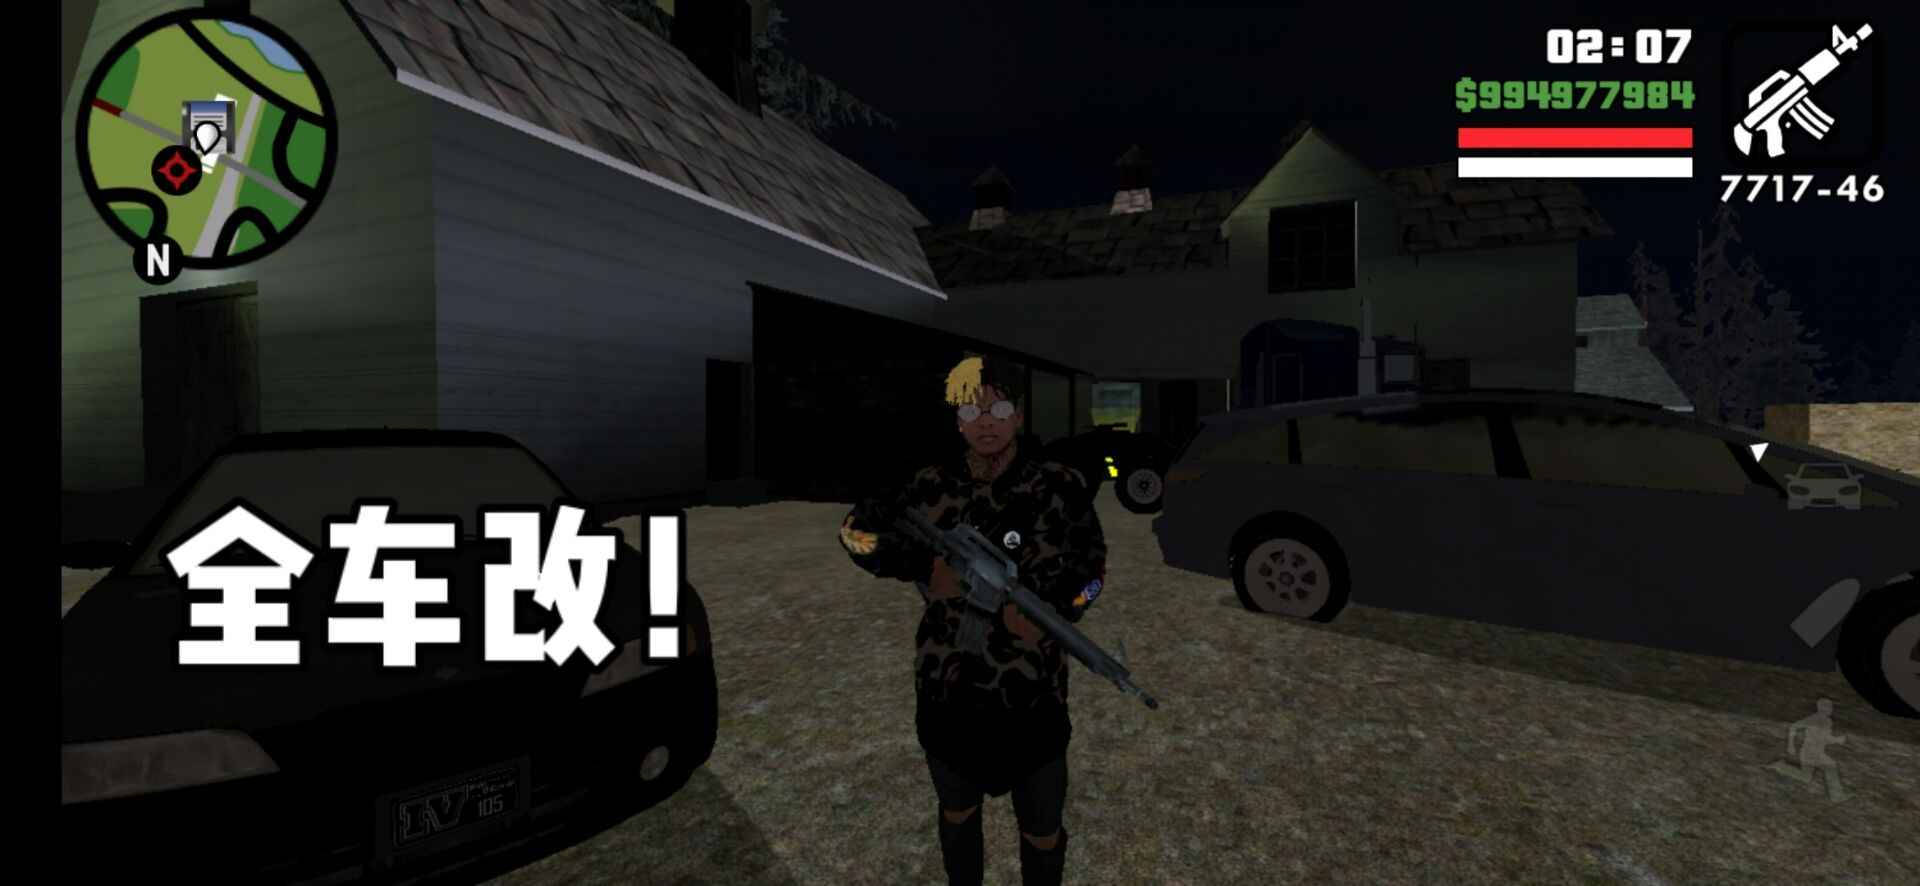 Grand Theft Auto: San Andreas(เมนูโกง GTA4+ ปลอม) Game screenshot  3